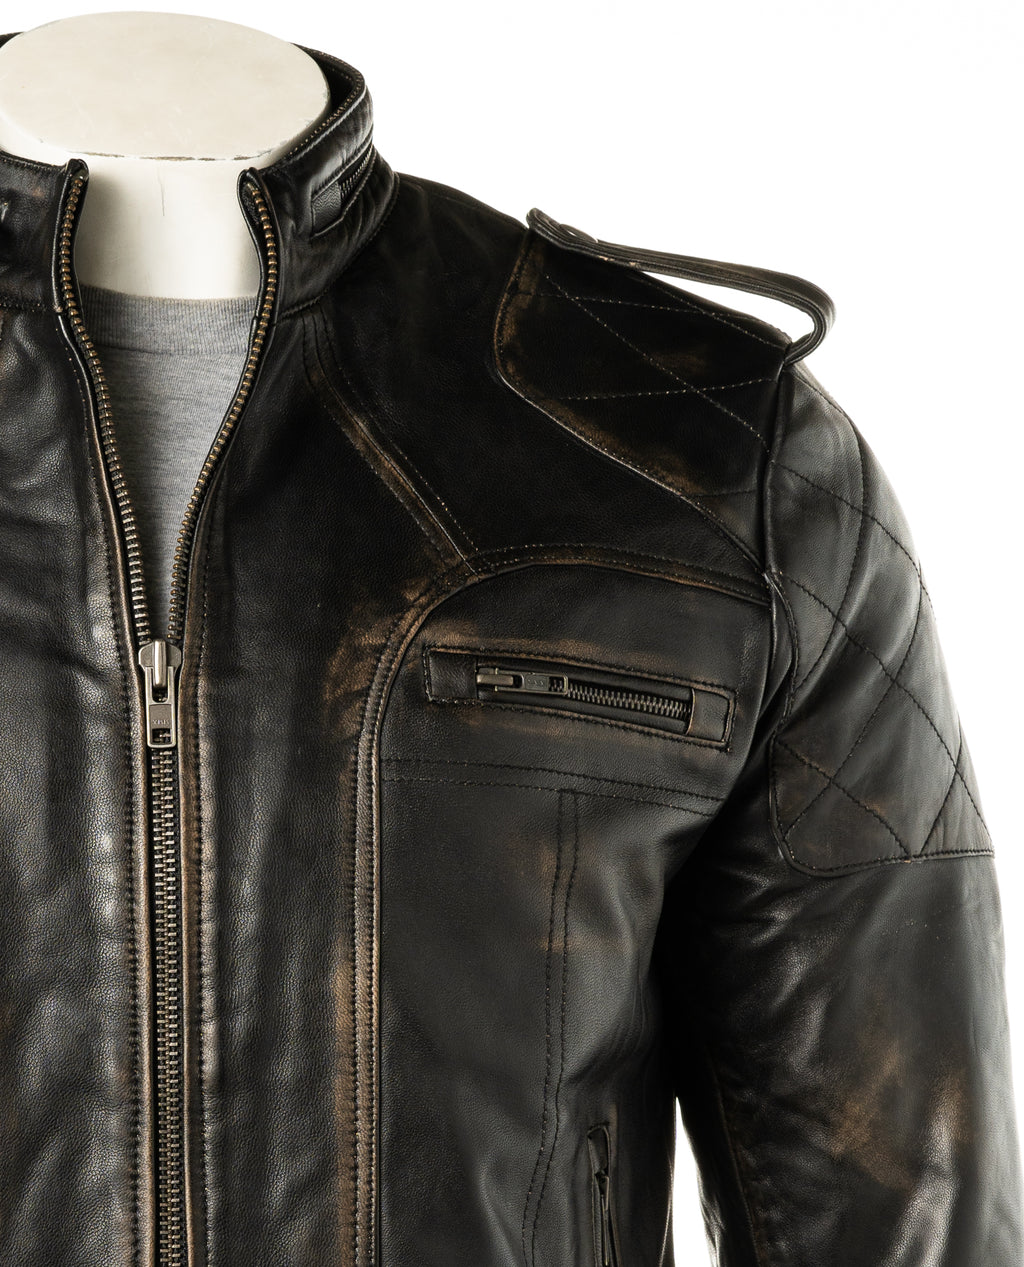 Mens Antique Black Leather Biker Style Jacket: Alvize